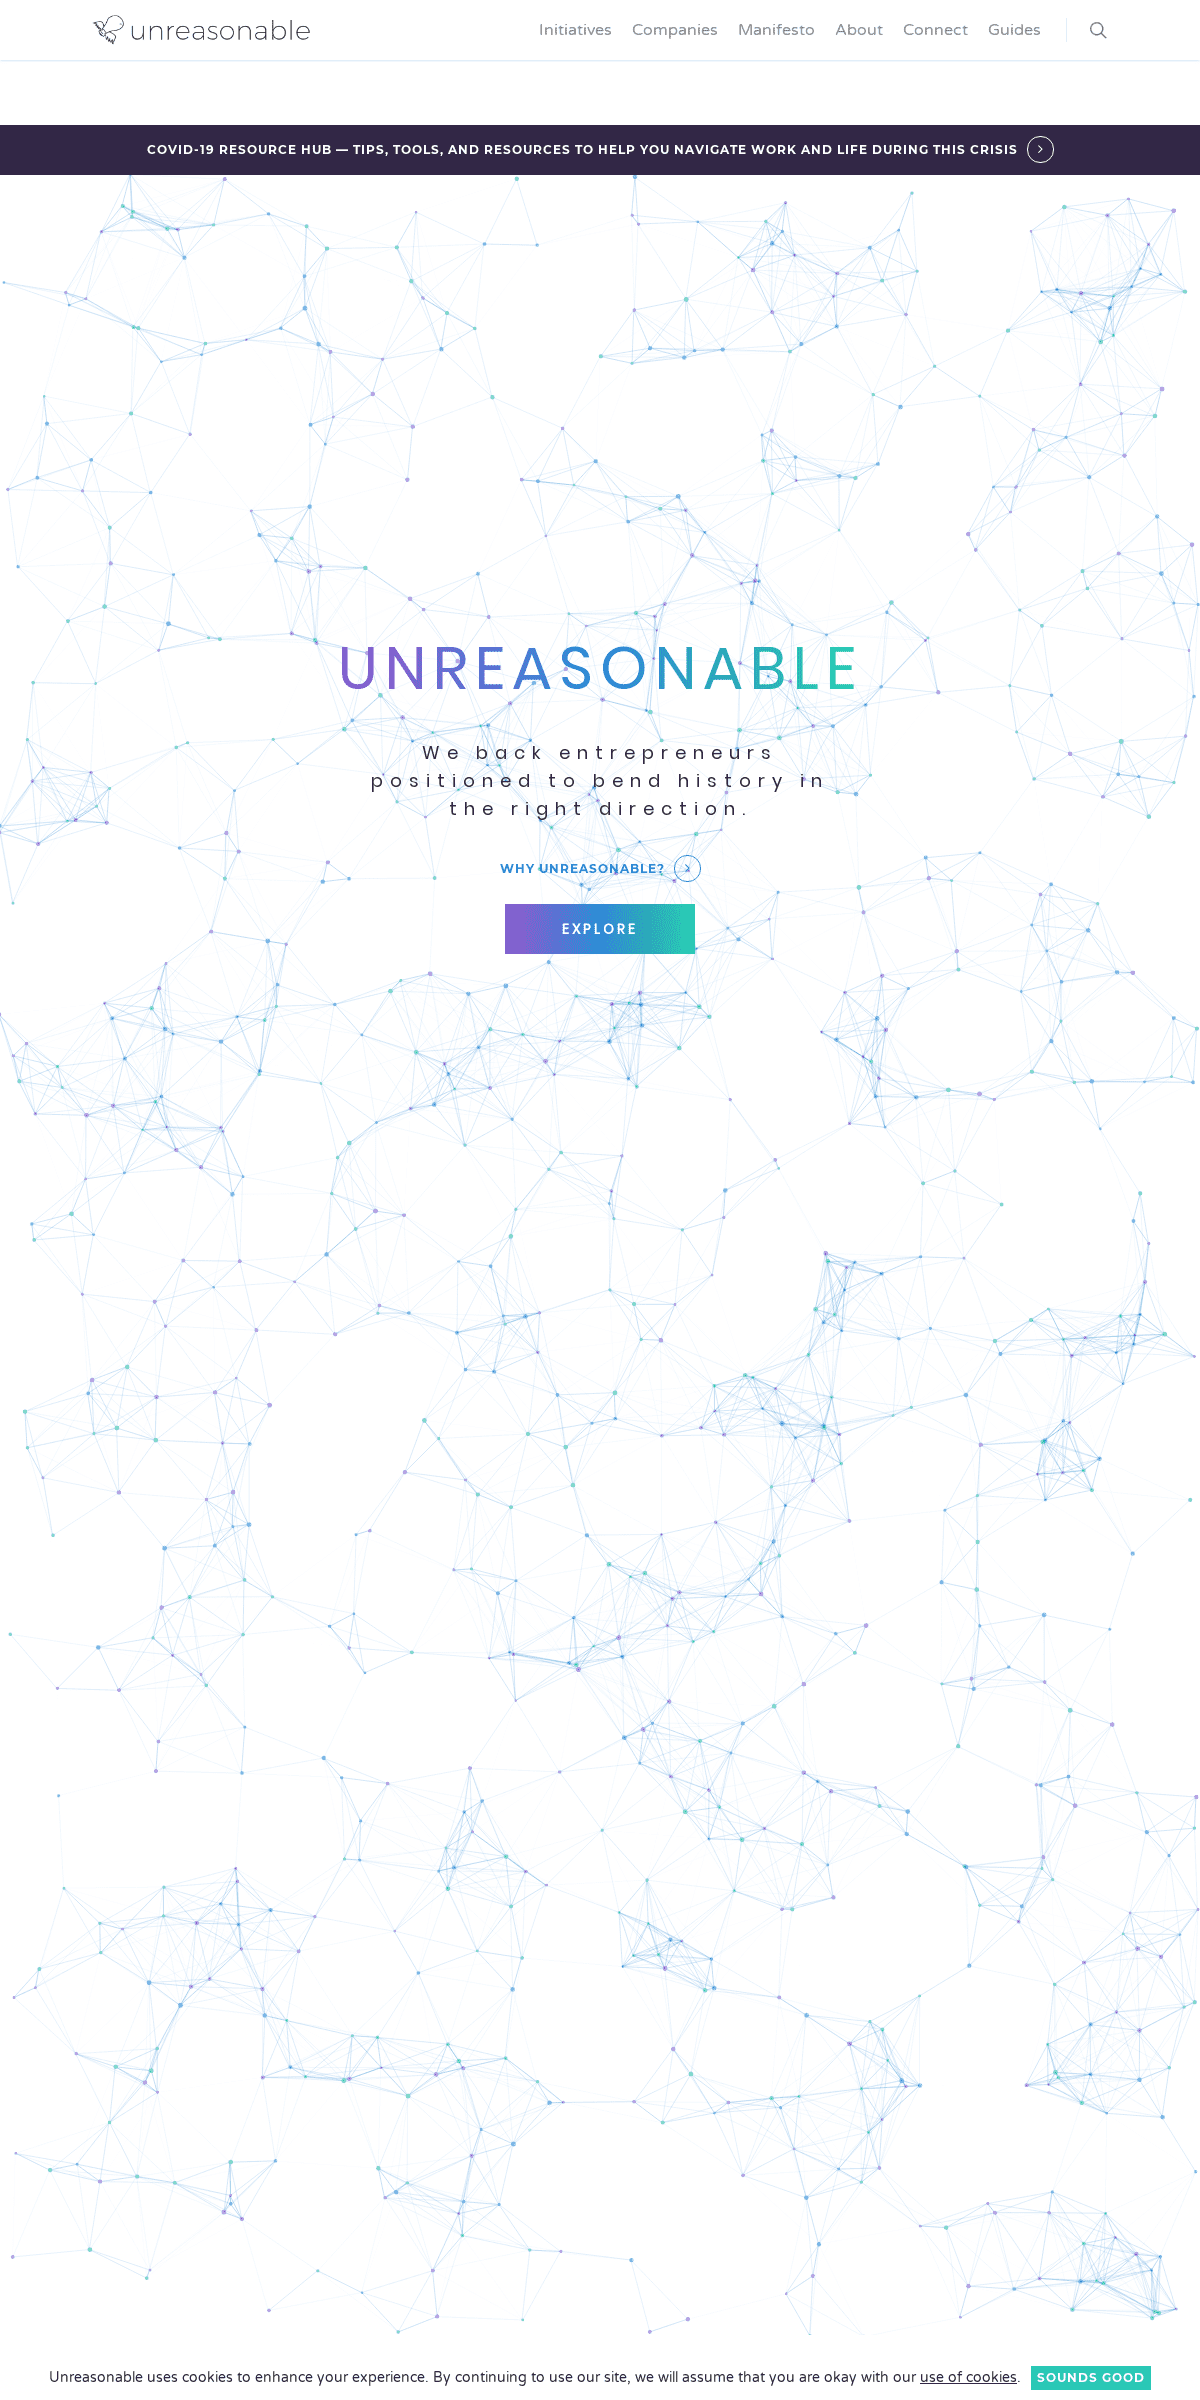 A complete backup of unreasonablegroup.com